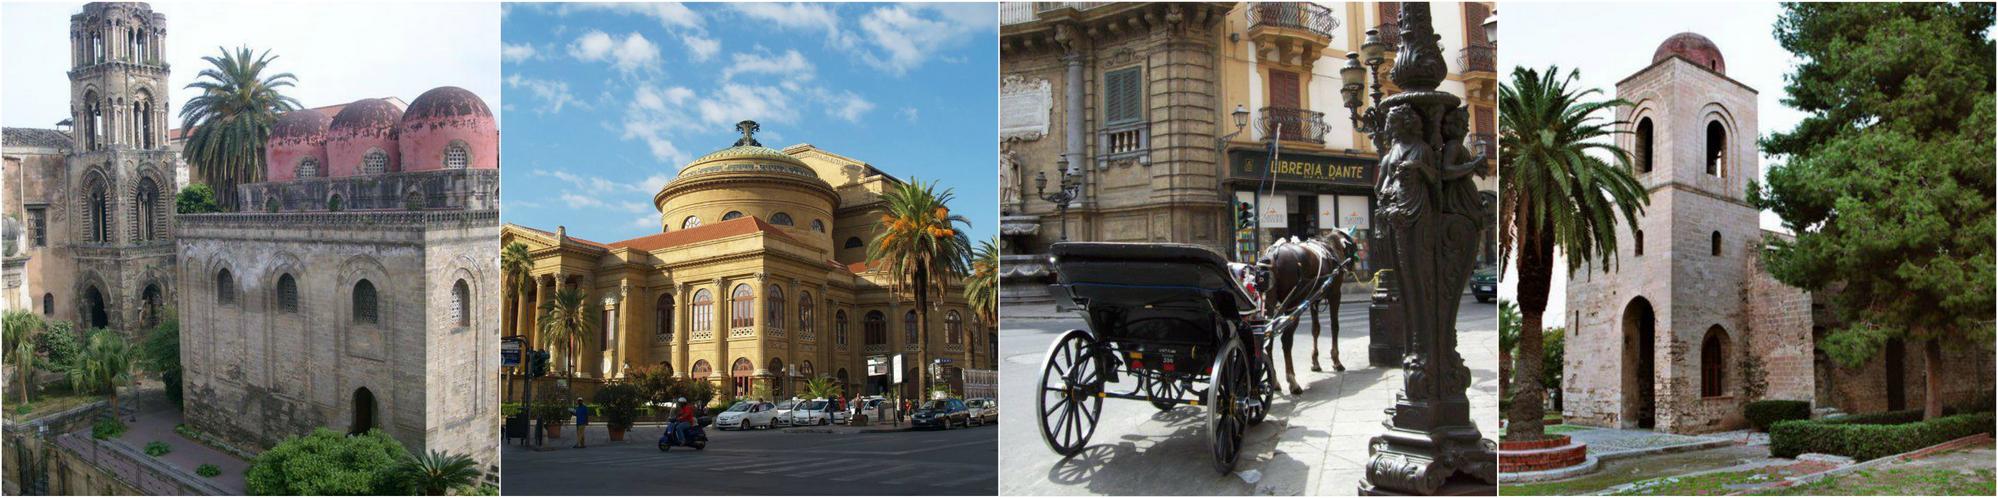 Sicily DMC Incentives, Palermo and Monreale